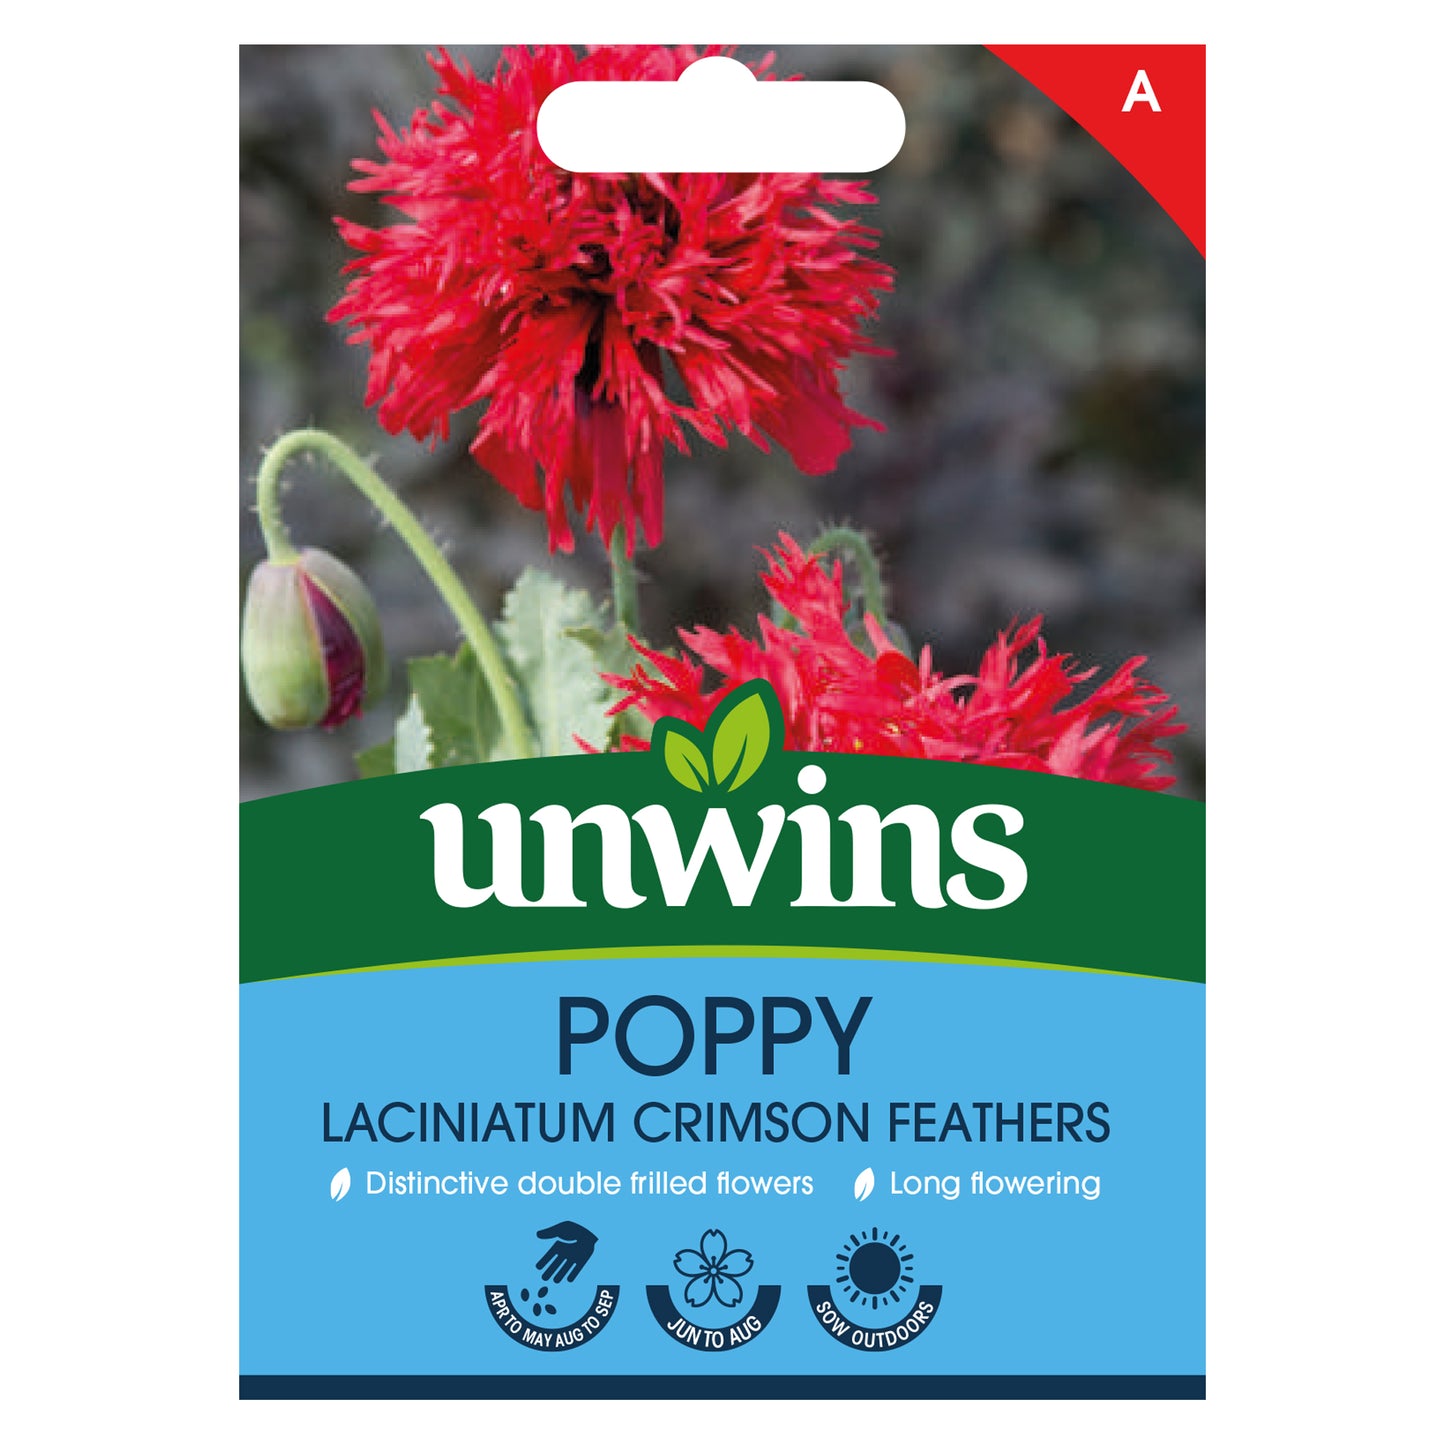 Unwins Poppy Laciniatum Crimson Feathers Seeds front of pack